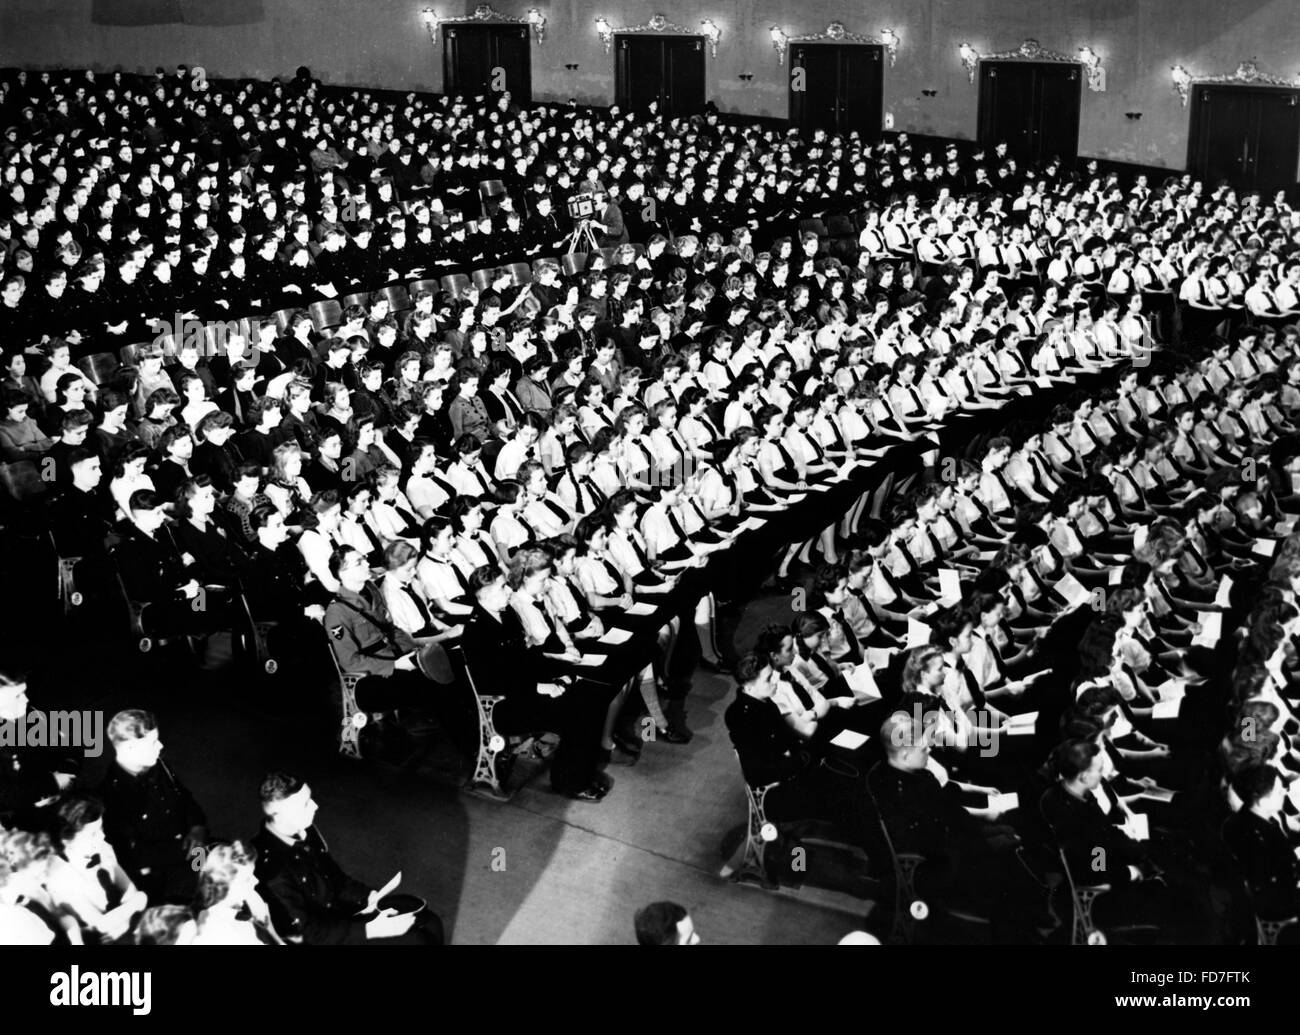 Verpflichtung der Jugend (Commitment of the Youth) ceremony at the Deutsche Opernhaus, 1941 Stock Photo